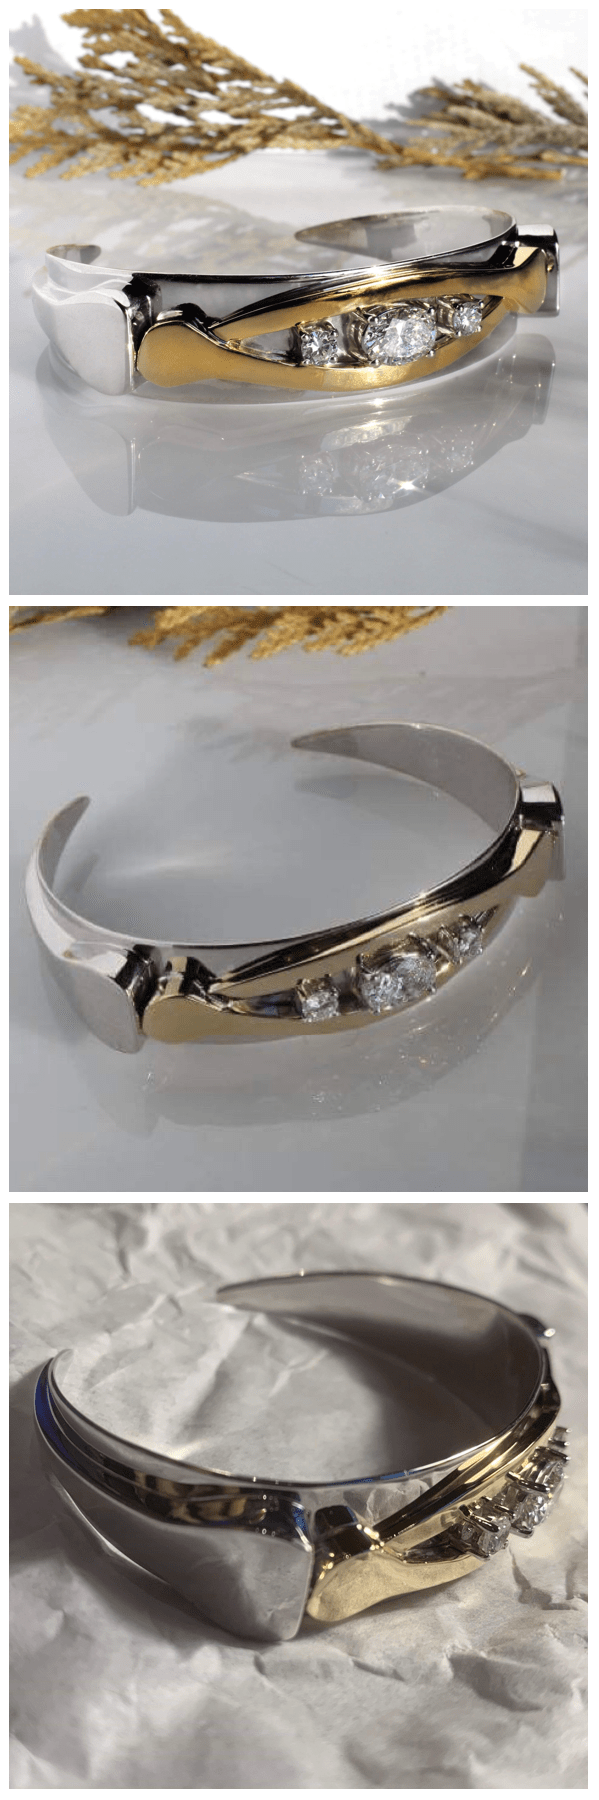 3d modeling 3d printing cad Rhino bracelet jewelry